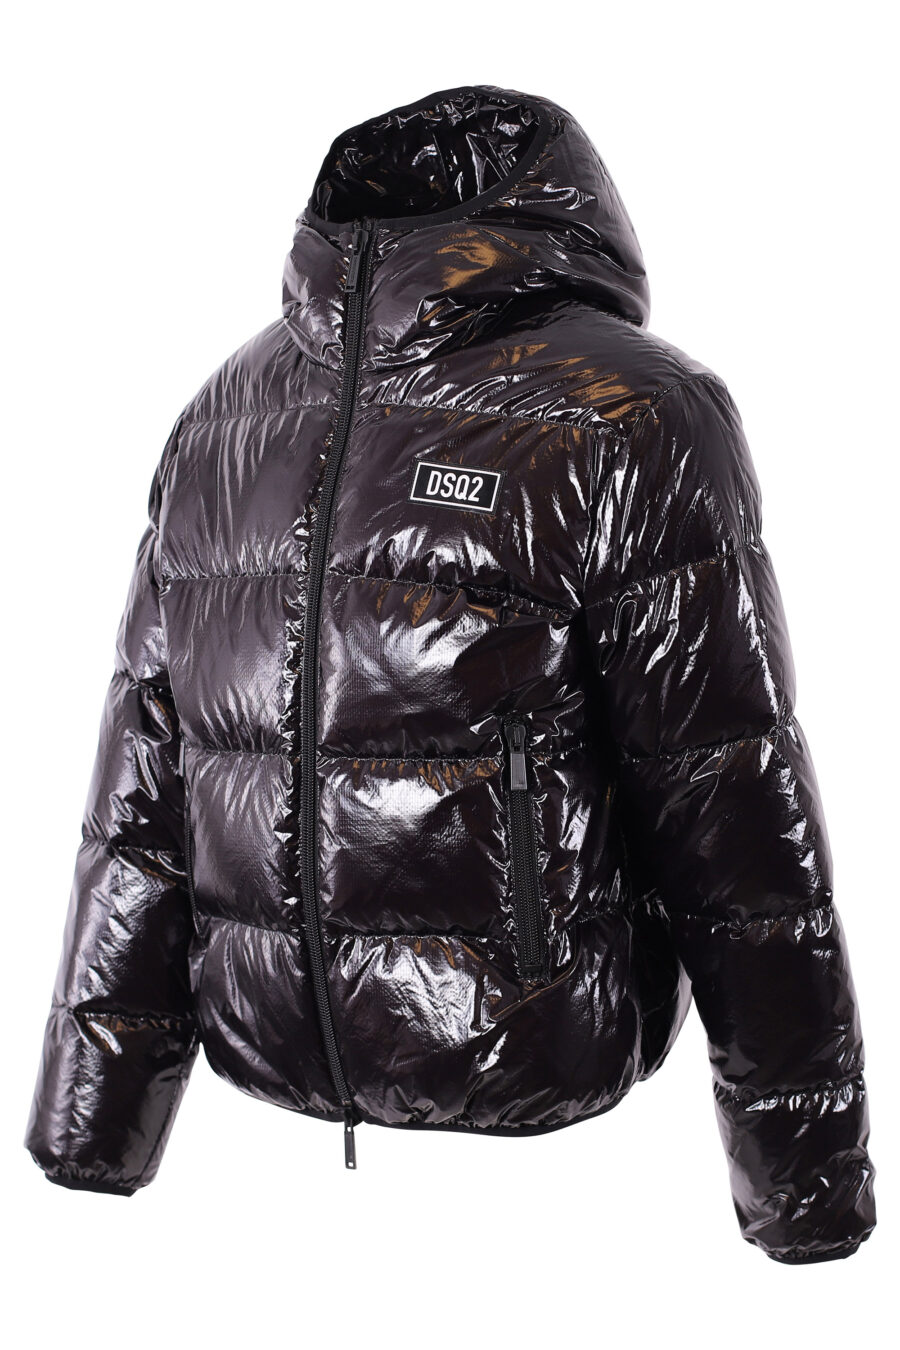 Black shiny jacket with minilogue - IMG 1093